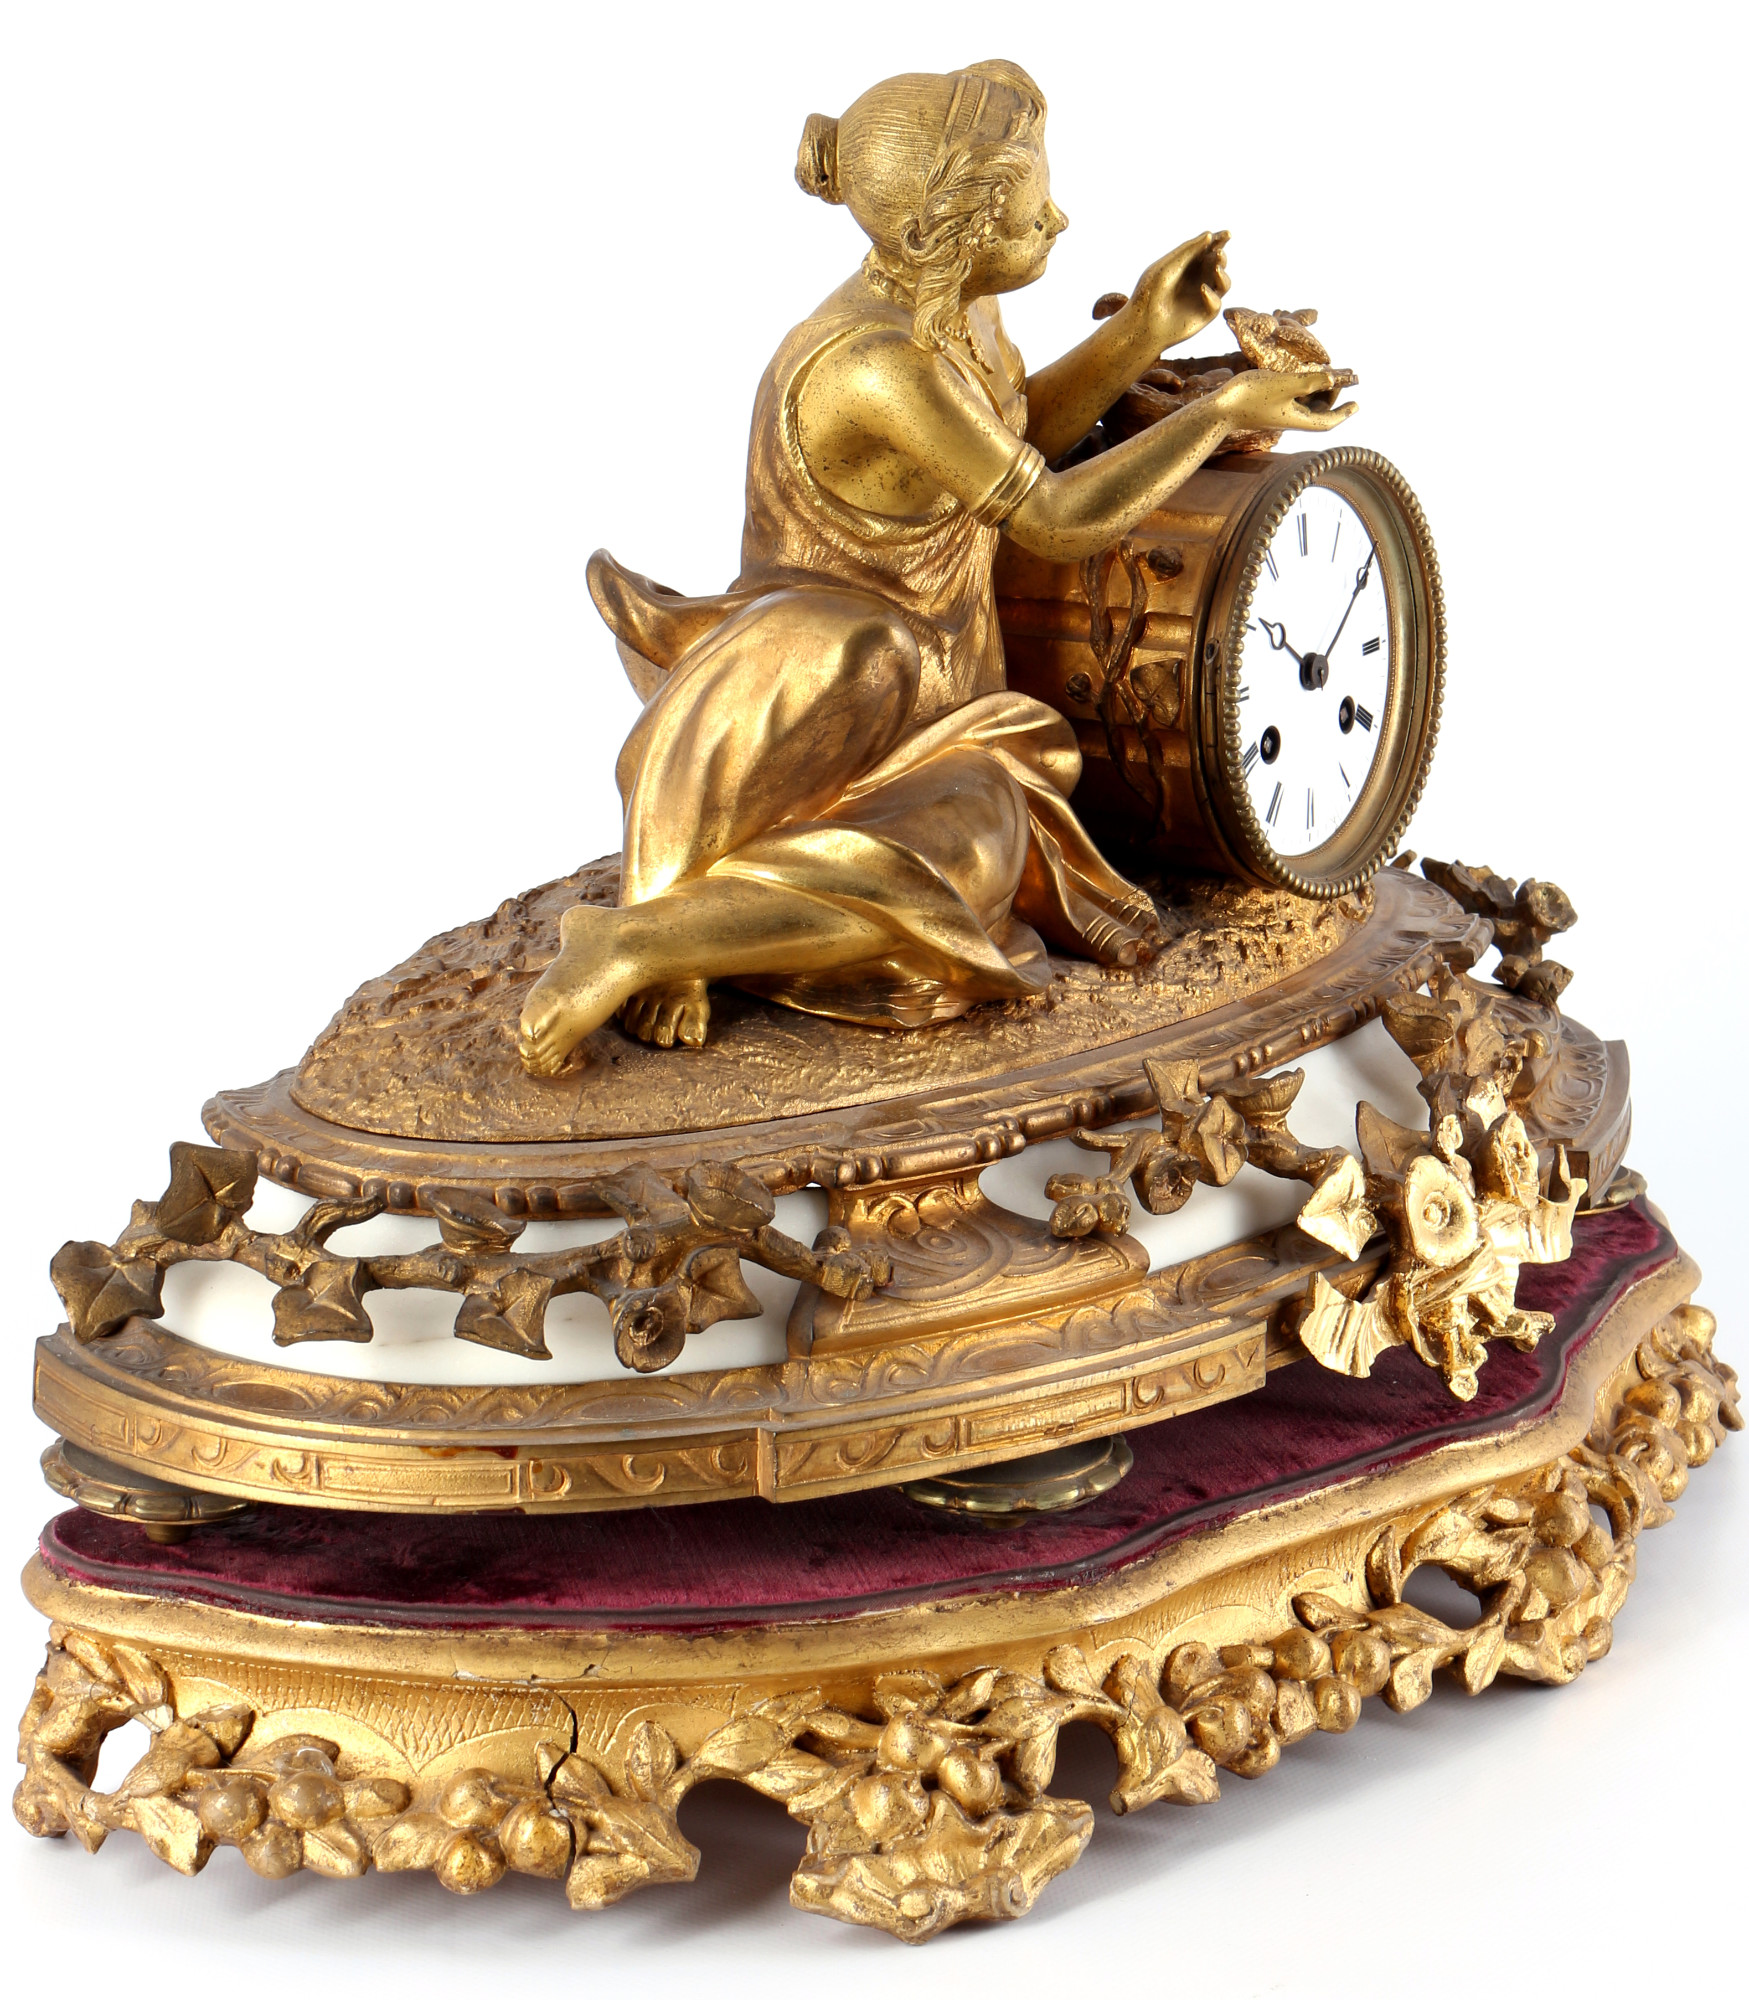 French bronze mantel clock 19th century, Kaminuhr Frankreich 19. Jahrhundert, - Image 3 of 5